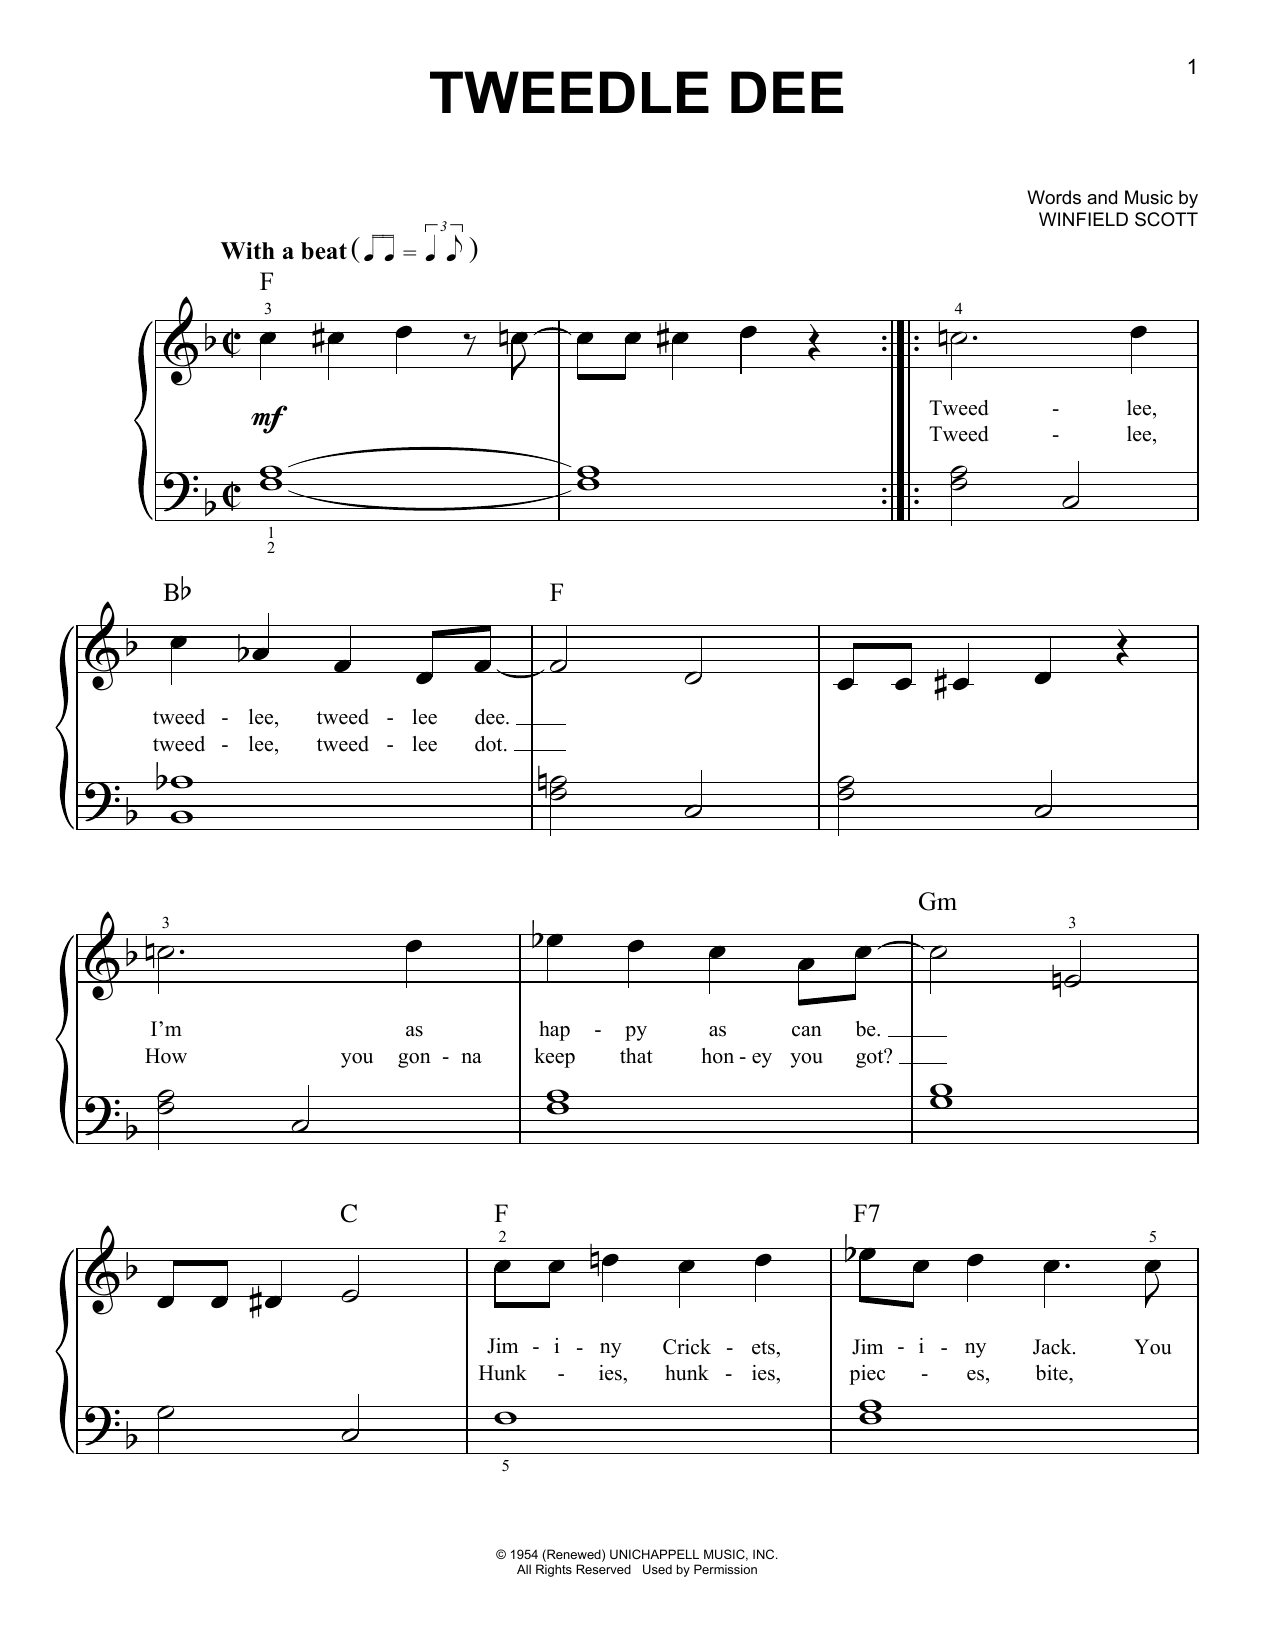 Georgia Gibbs Tweedle Dee Sheet Music Notes & Chords for Melody Line, Lyrics & Chords - Download or Print PDF